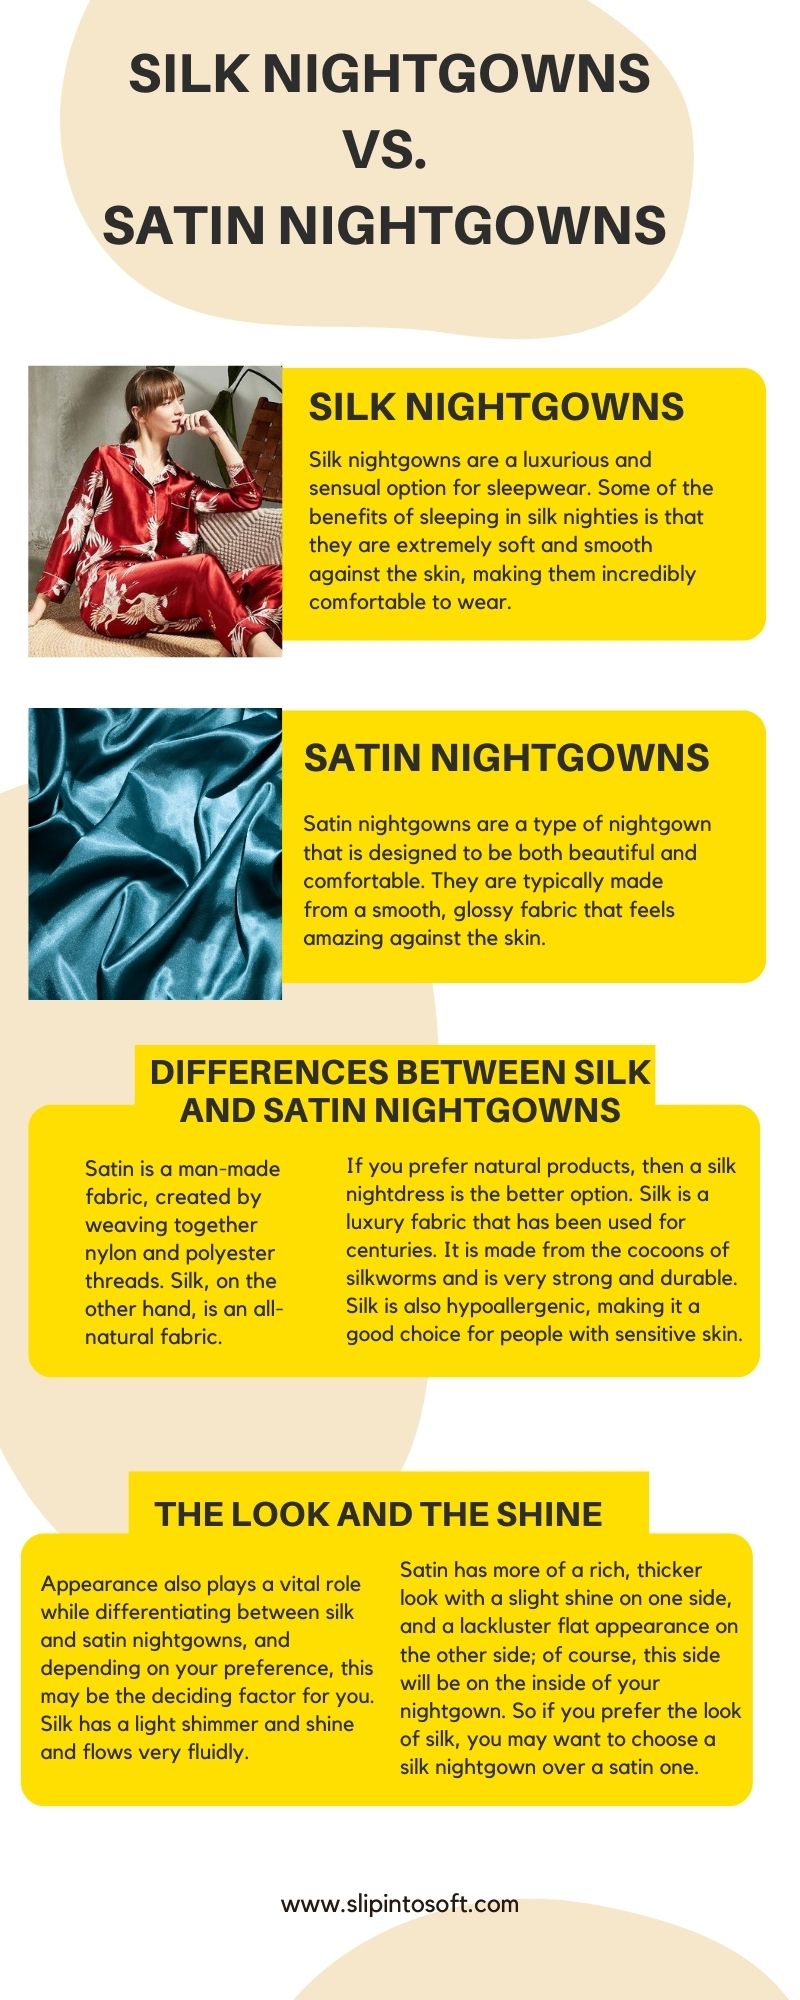 Silk Nightgowns vs. Satin Nightgowns